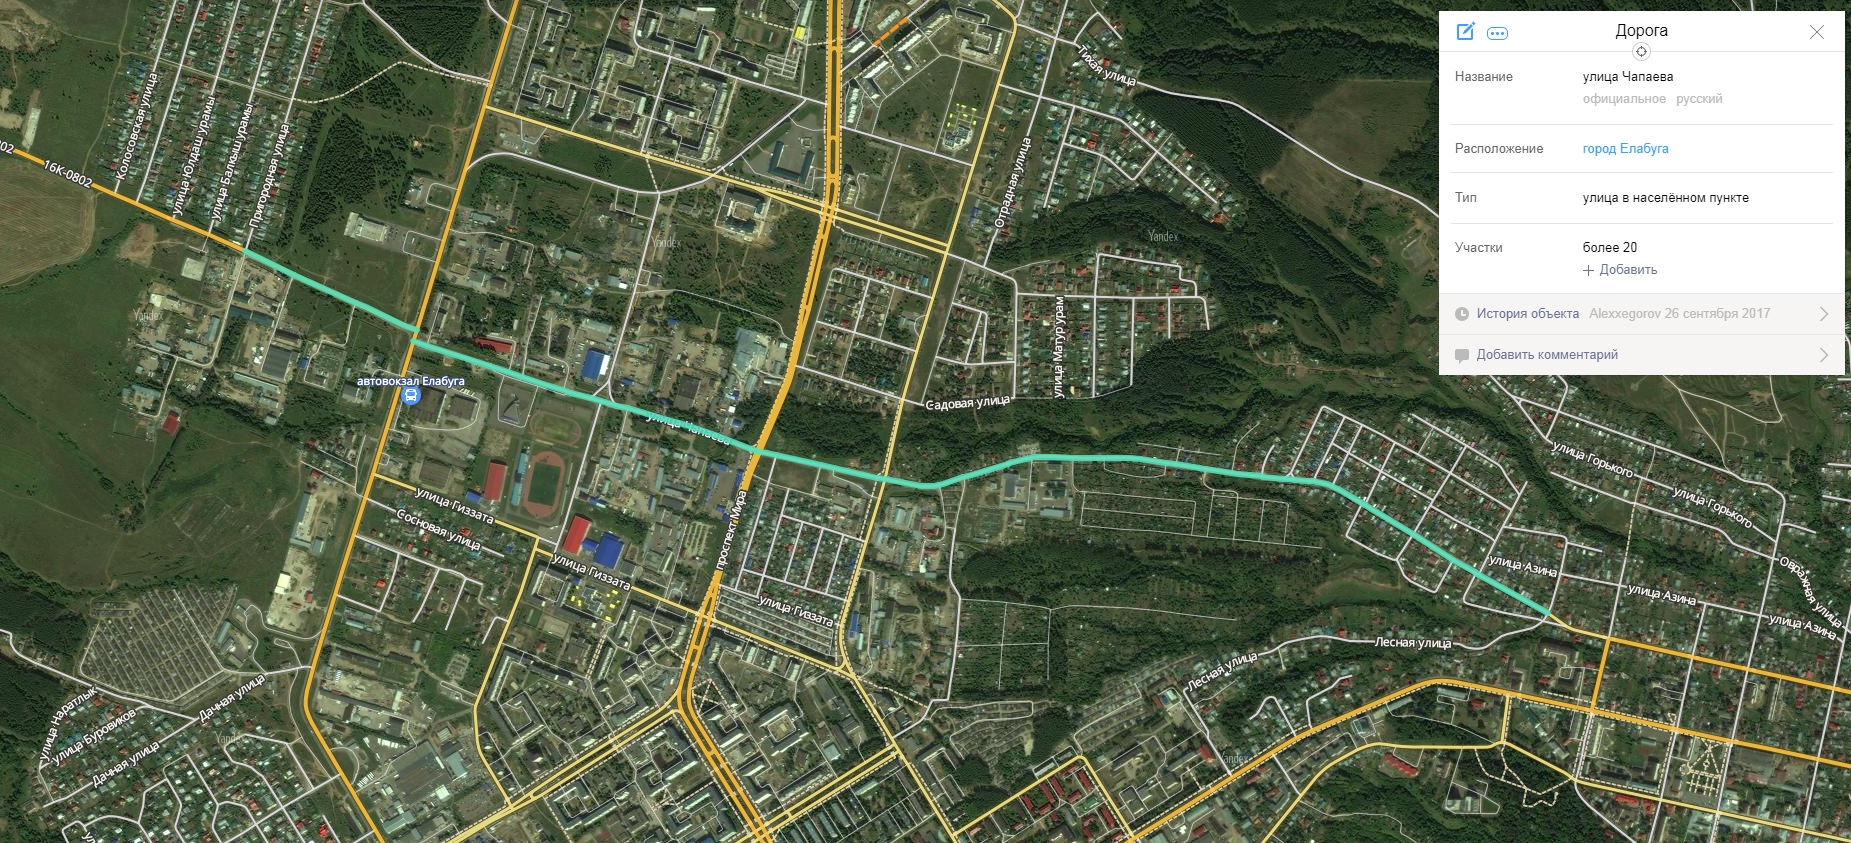 Город елабуга на карте. План города Елабуга. Спутниковая карта Елабуги. Елабуга карта города с улицами.